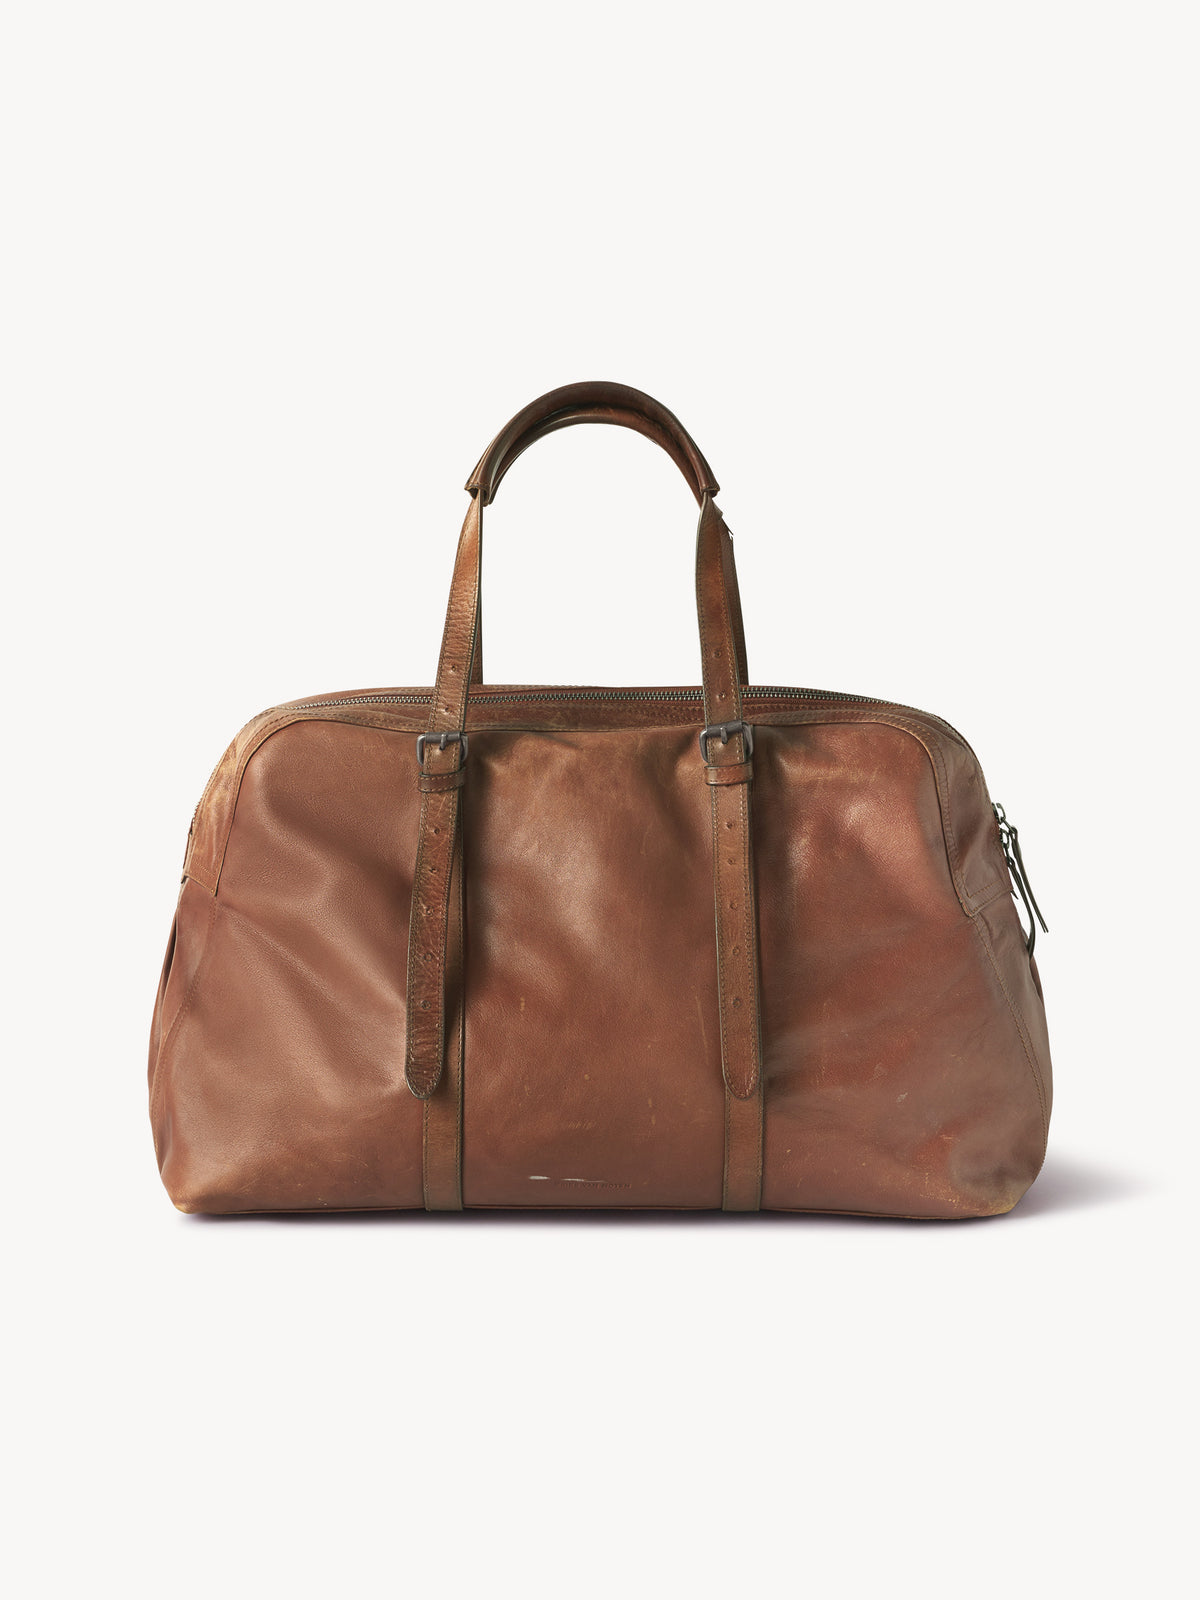 Dries Van Noten Leather Weekender - 0154 - Product Flat